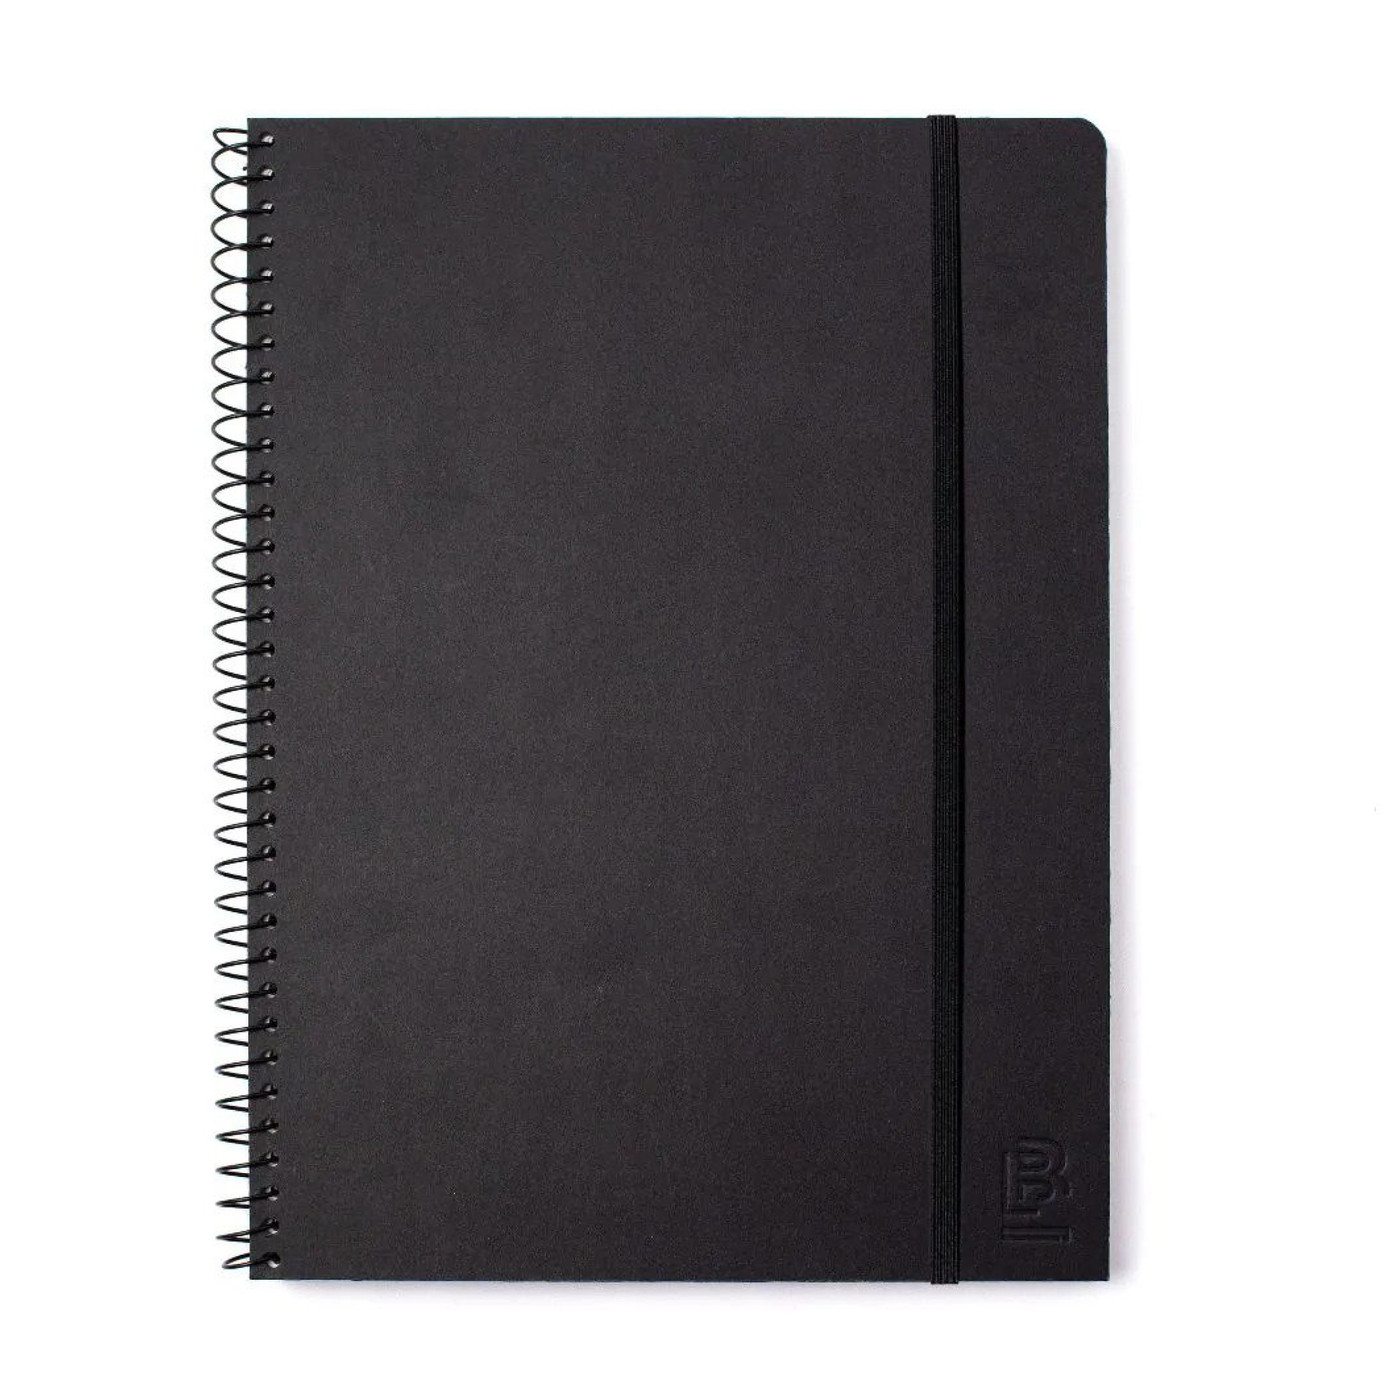 Blackwing spiral notebook - A4 - BLANK